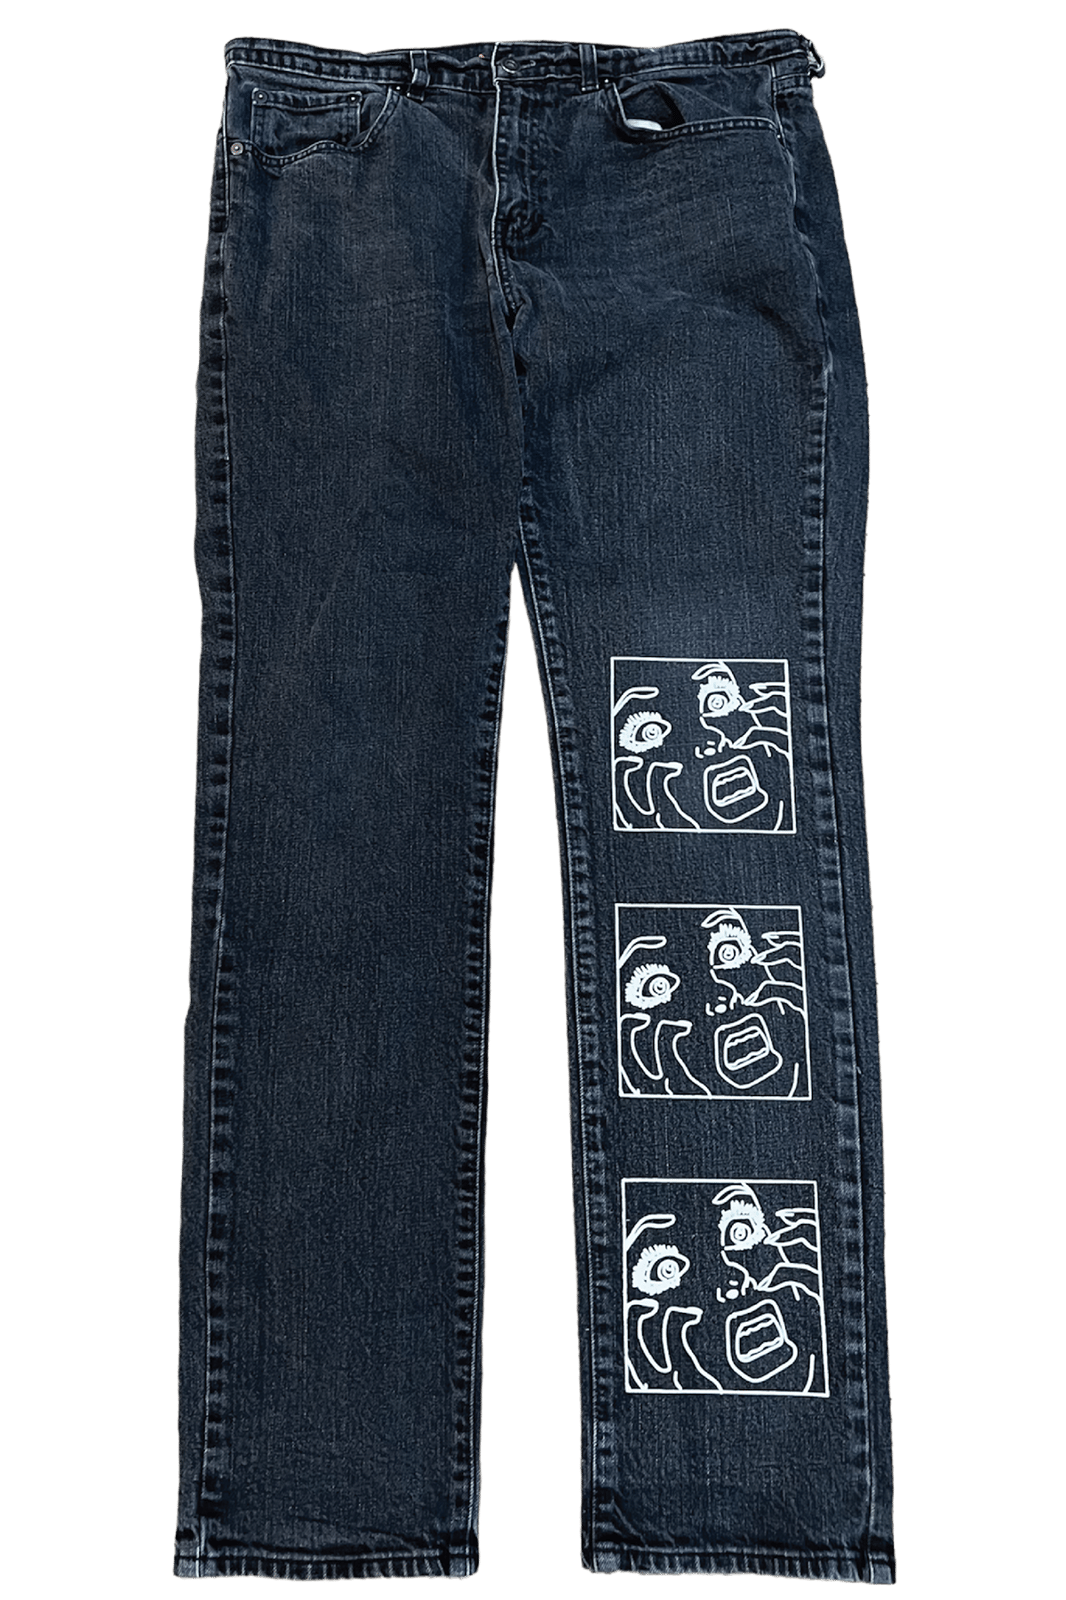 Anime My Hero Acadamia Jeans Custom Painted | eBay